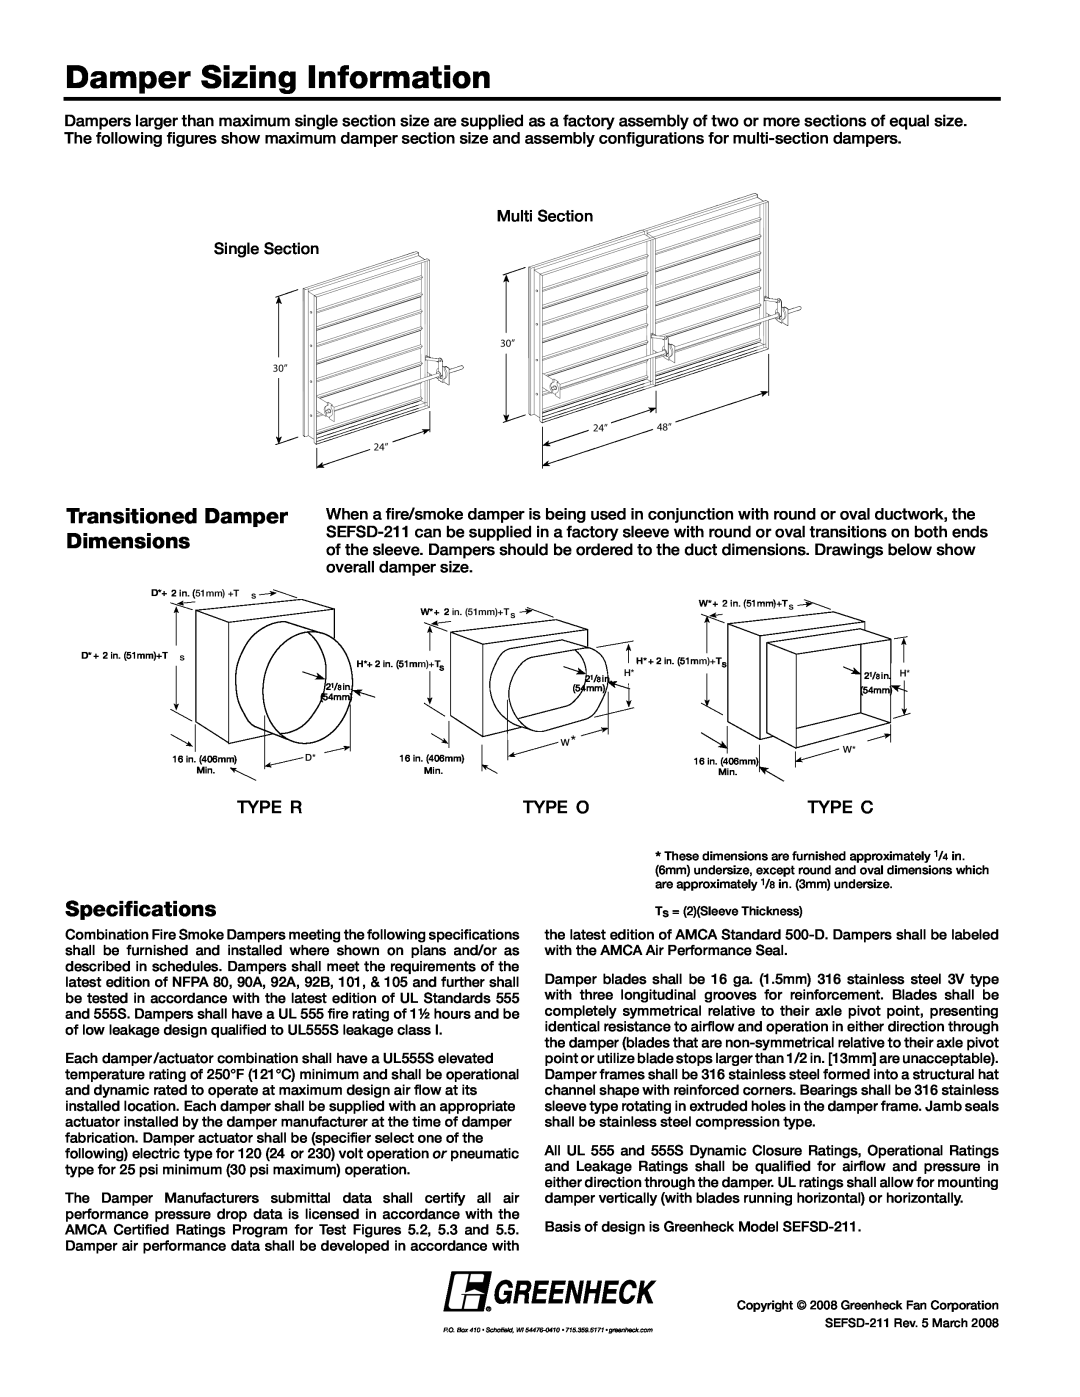 Greenheck Fan SEFSD-211 dimensions Damper Sizing Information, Transitioned Damper Dimensions, Specifications 